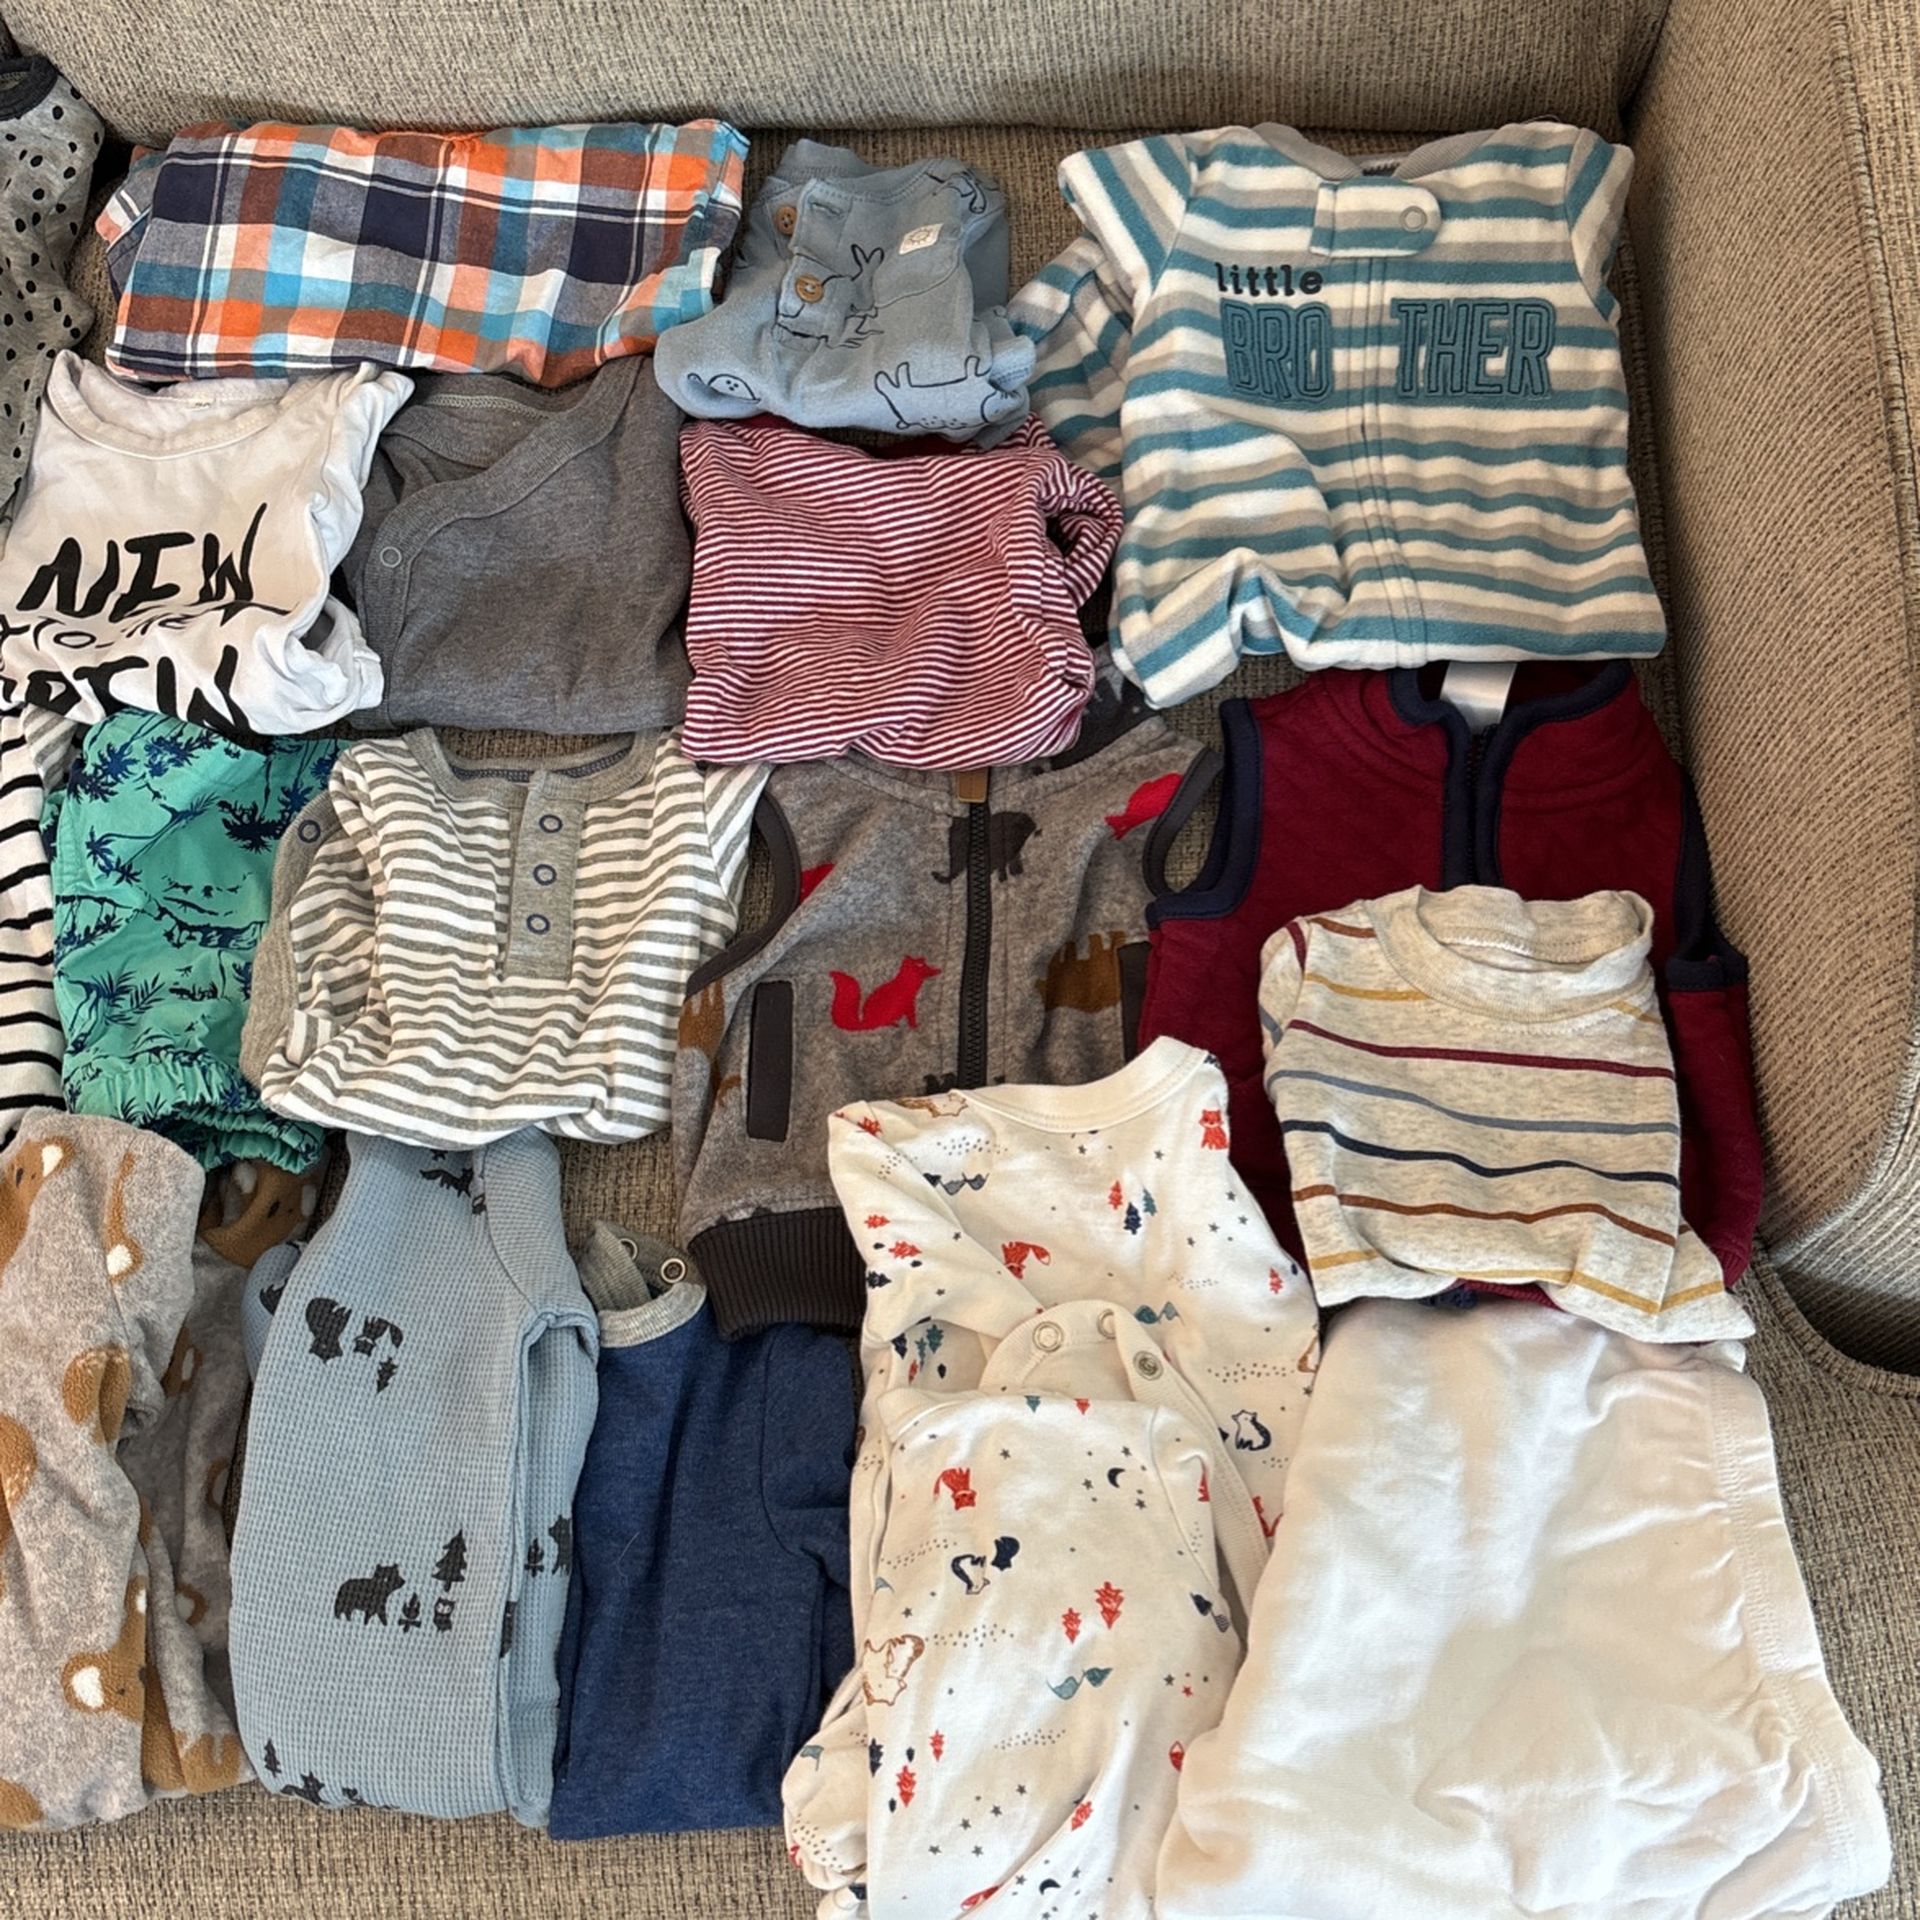 Boy Clothes Newborn 26 Items With A Few Sets. 